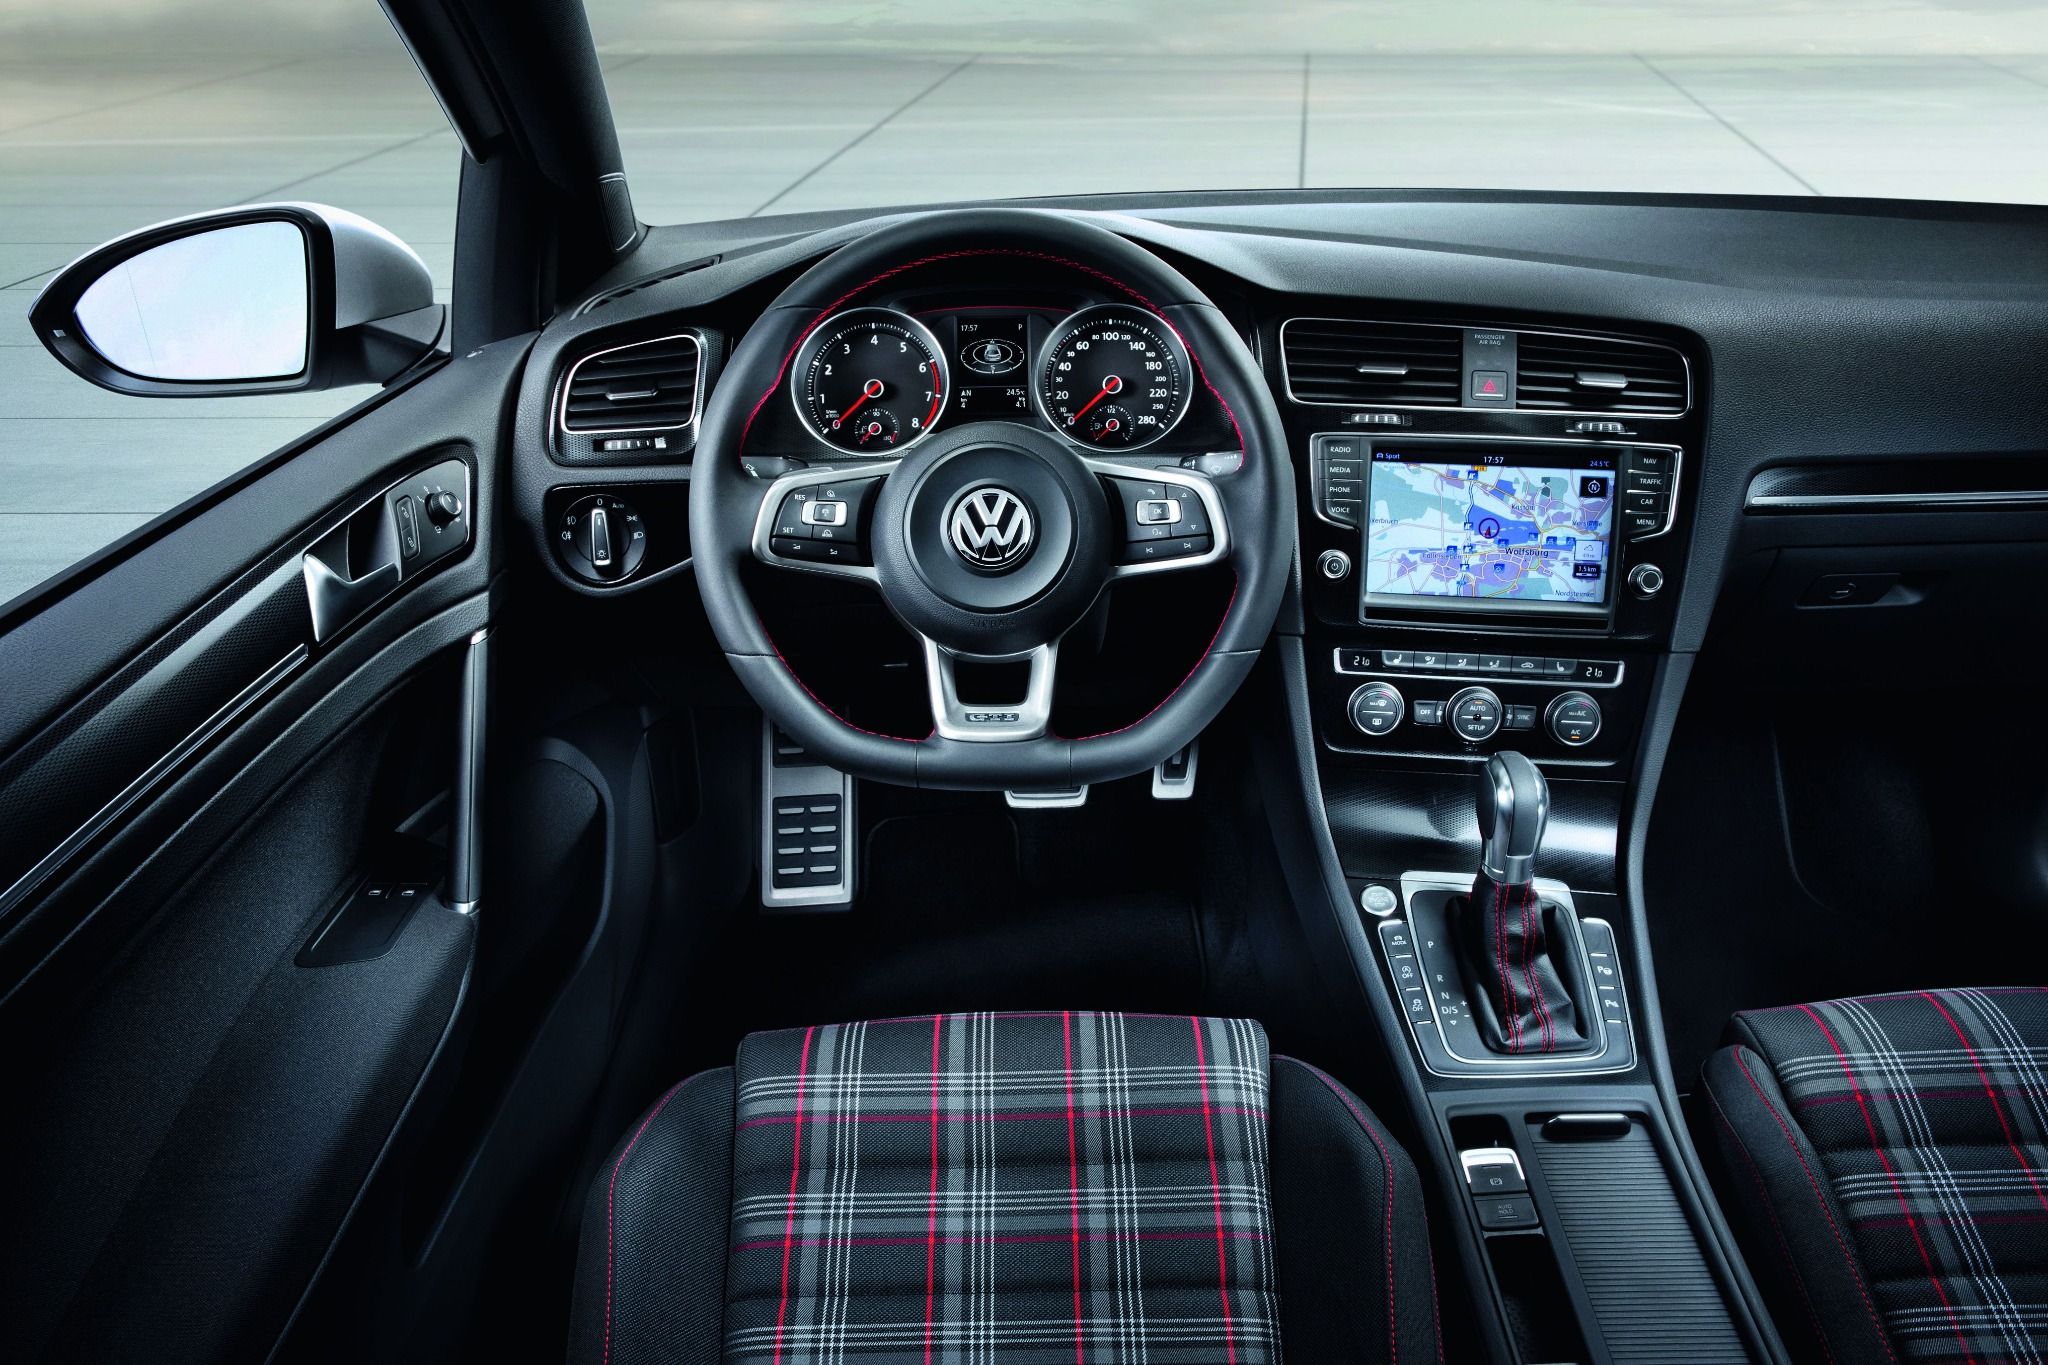 Interior - VW Golf Mark 6